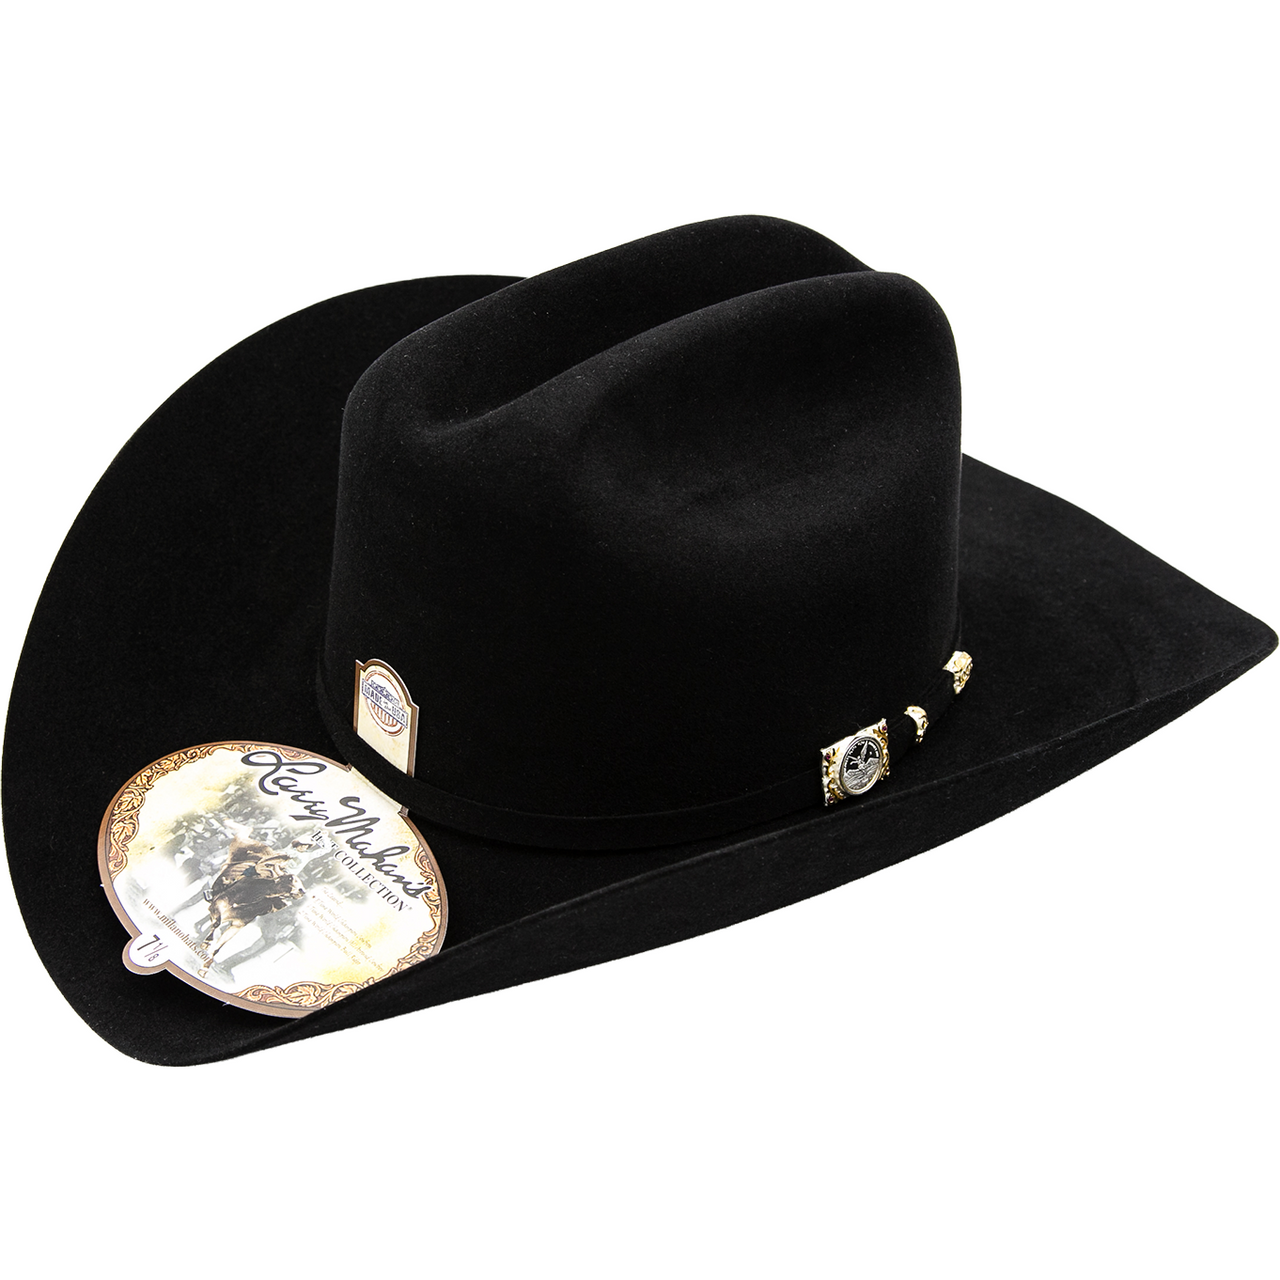 100x Larry Mahan Independencia Fur Felt Cowboy Hat Black - yeehawcowboy